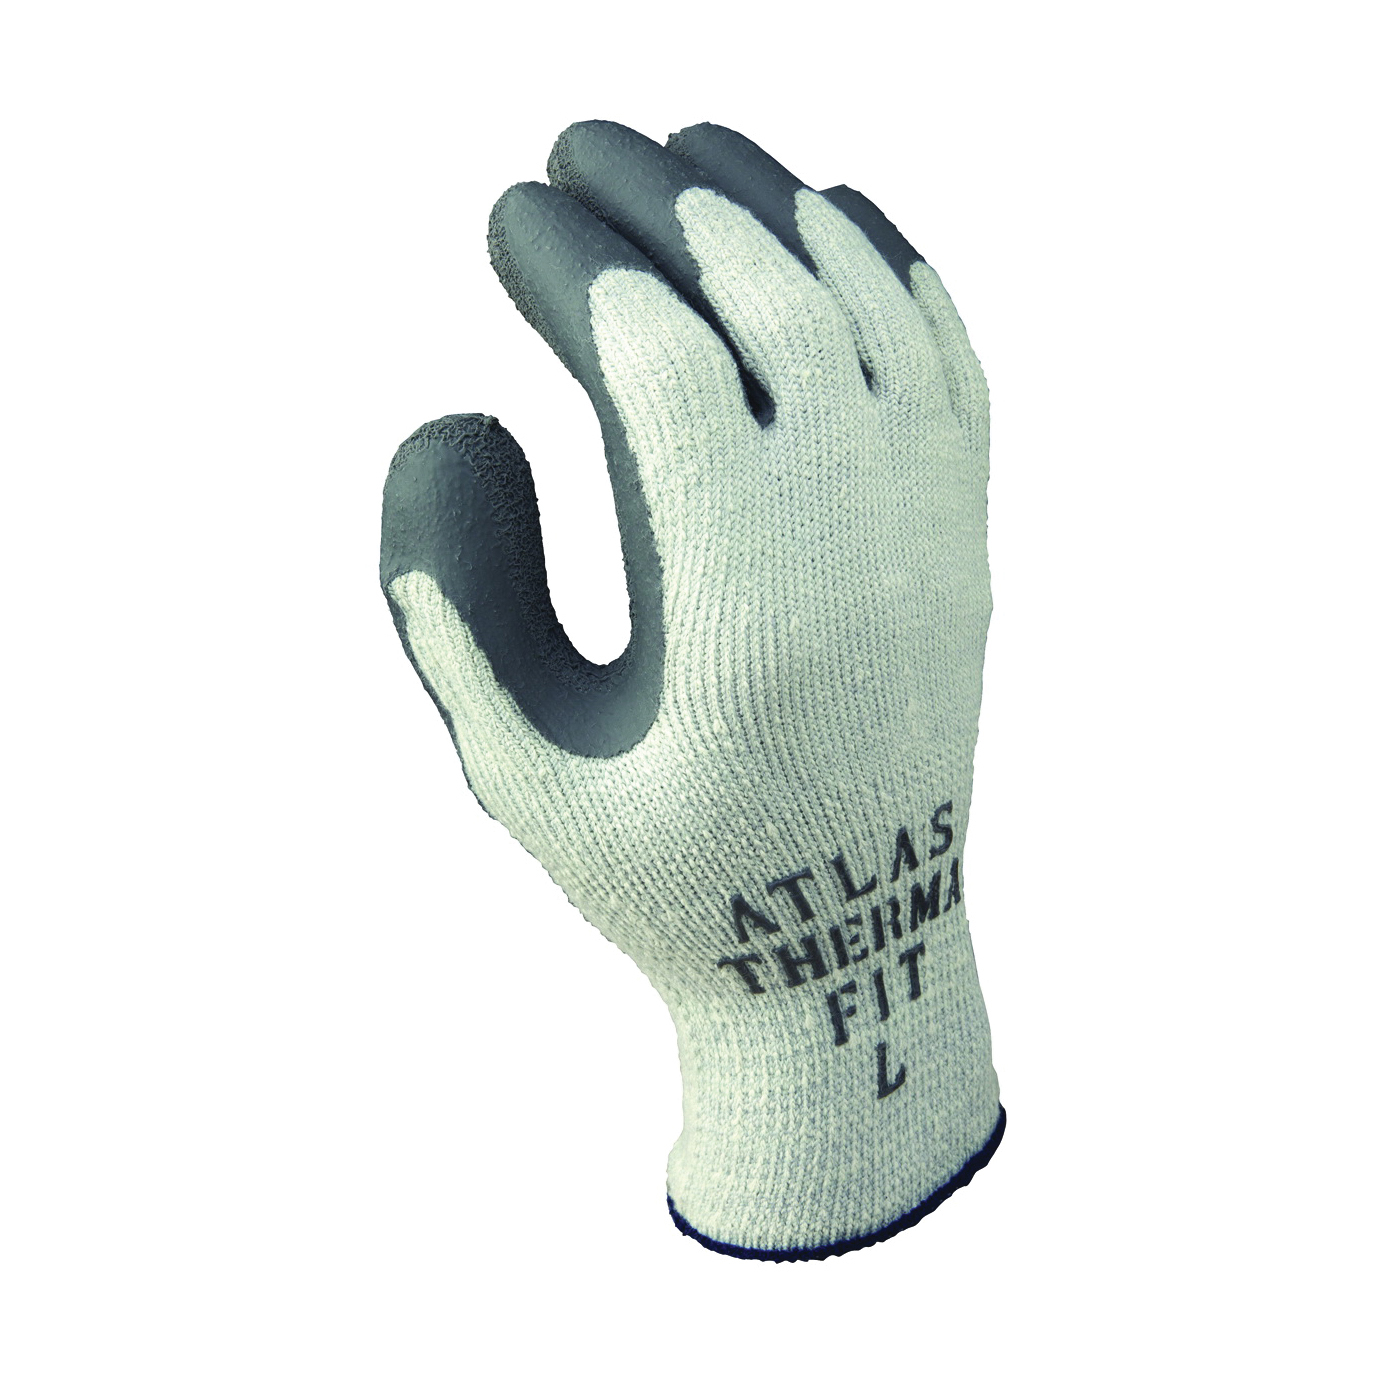 ThermaFit 451XL-10.RT Ergonomic Work Gloves, Unisex, XL, 10 in L, Knit Wrist Cuff, Rubber, Dark Gray